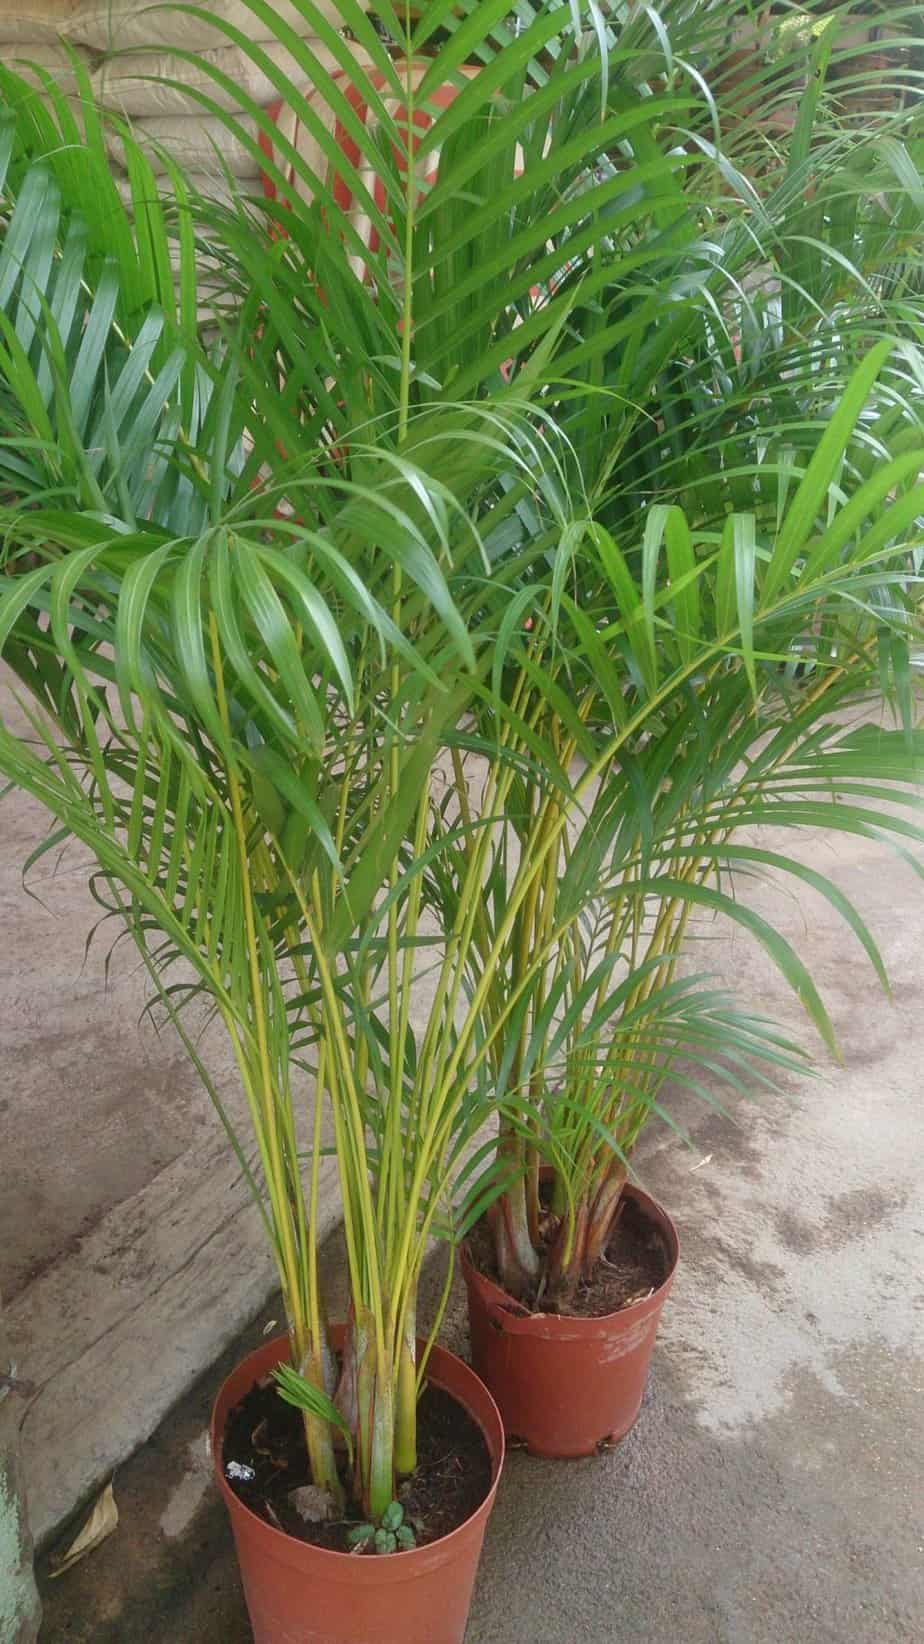 Areca palm tree